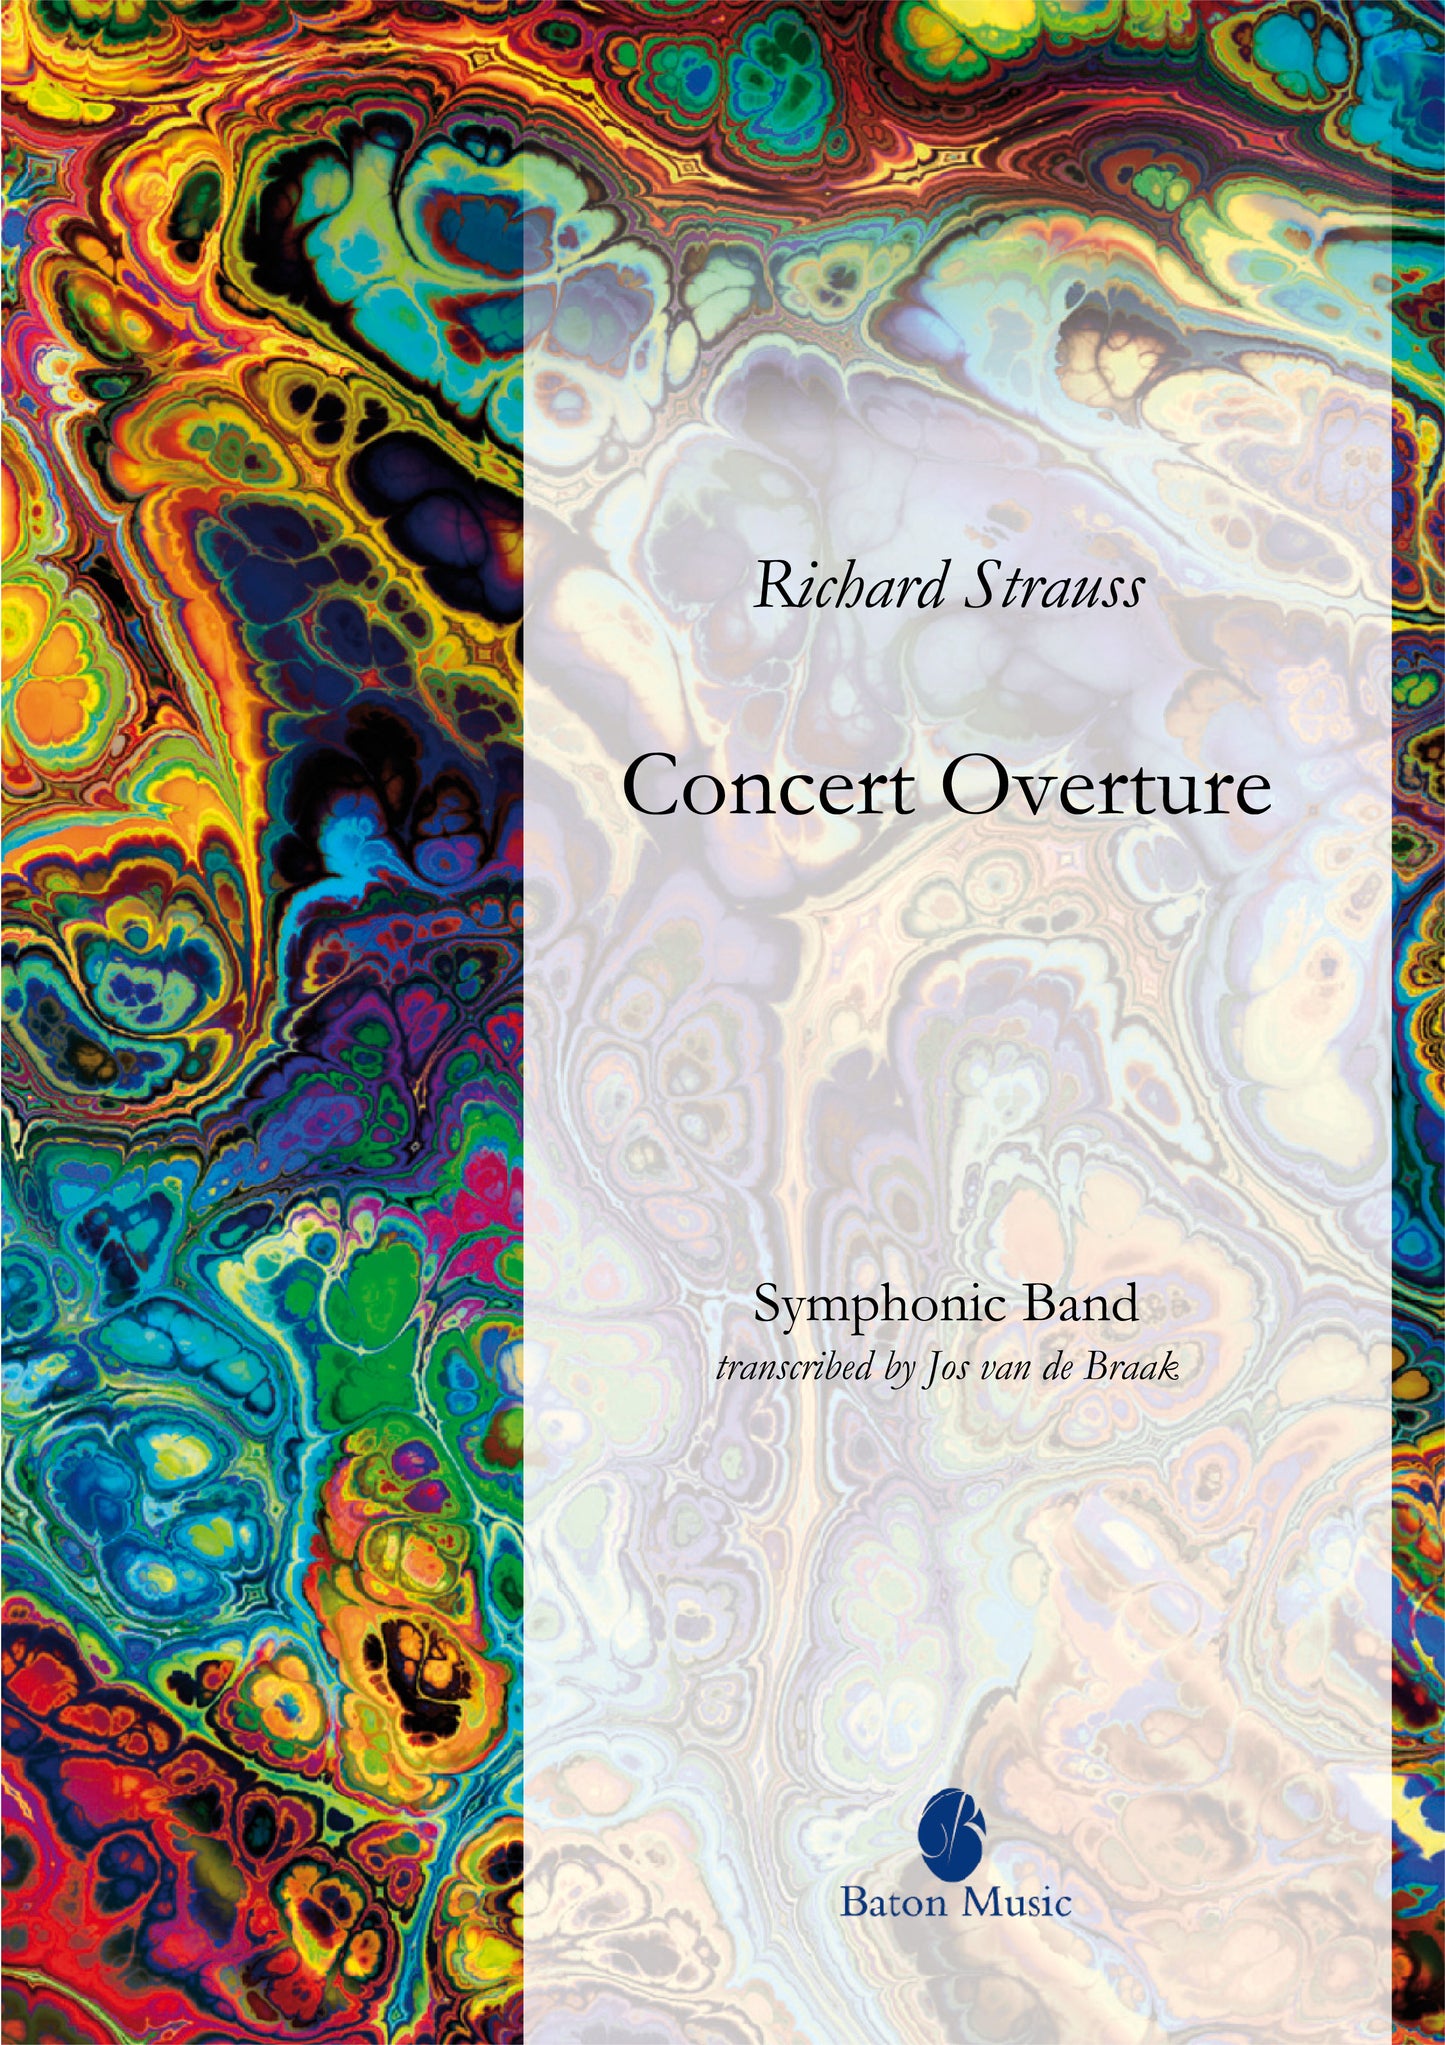 Concert Overture - Richard Strauss